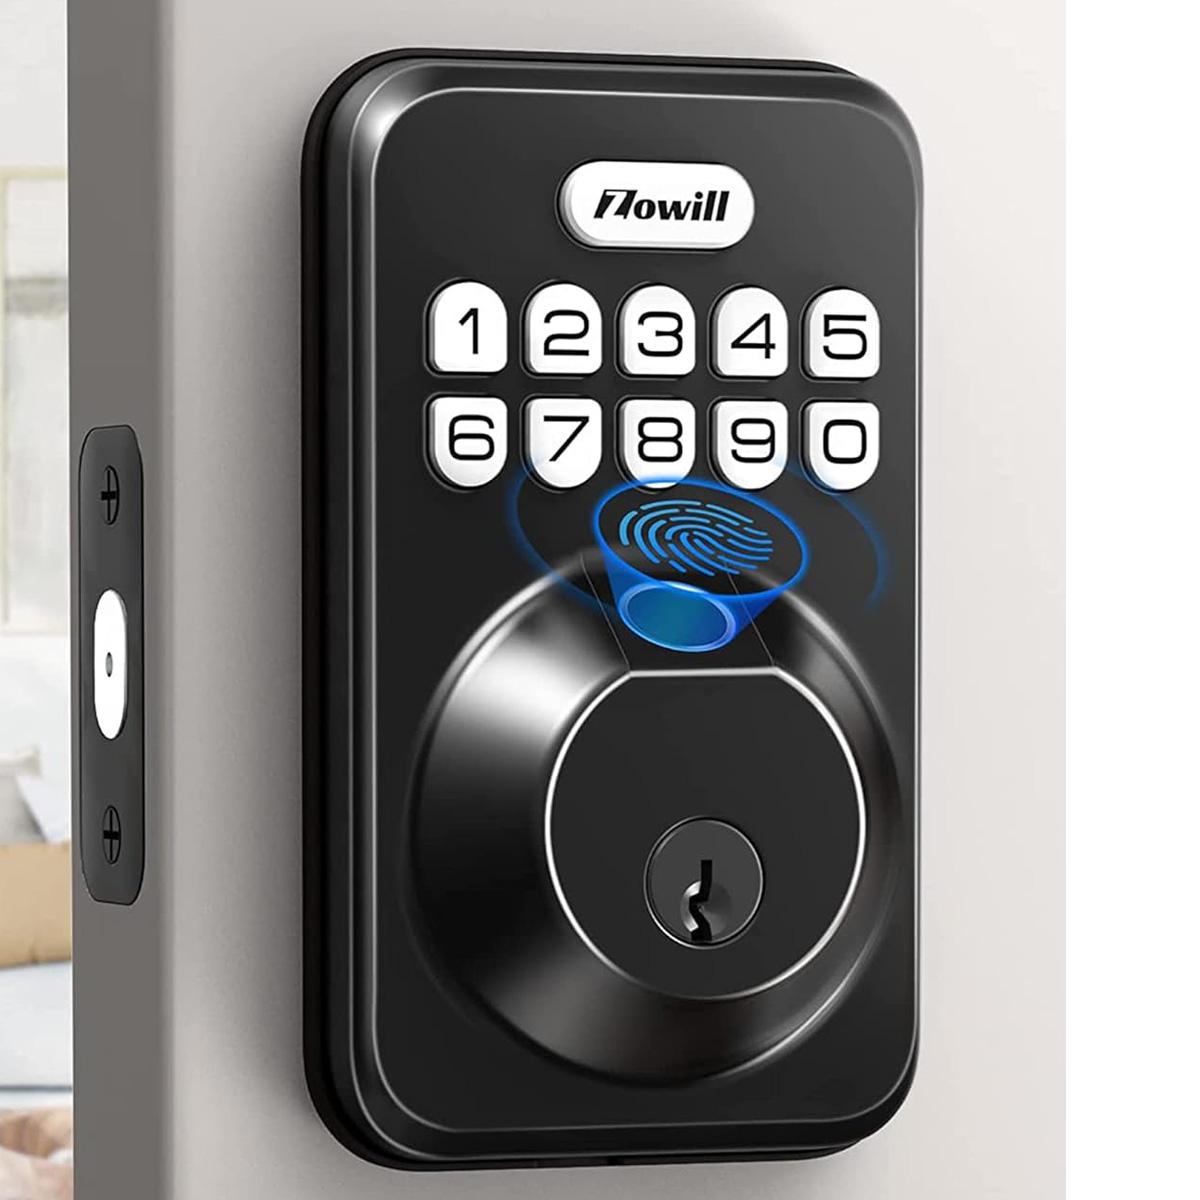 Zowill Keyless Entry Lock Keypad Deadbolt with Biometric Fingerprints for $21.59